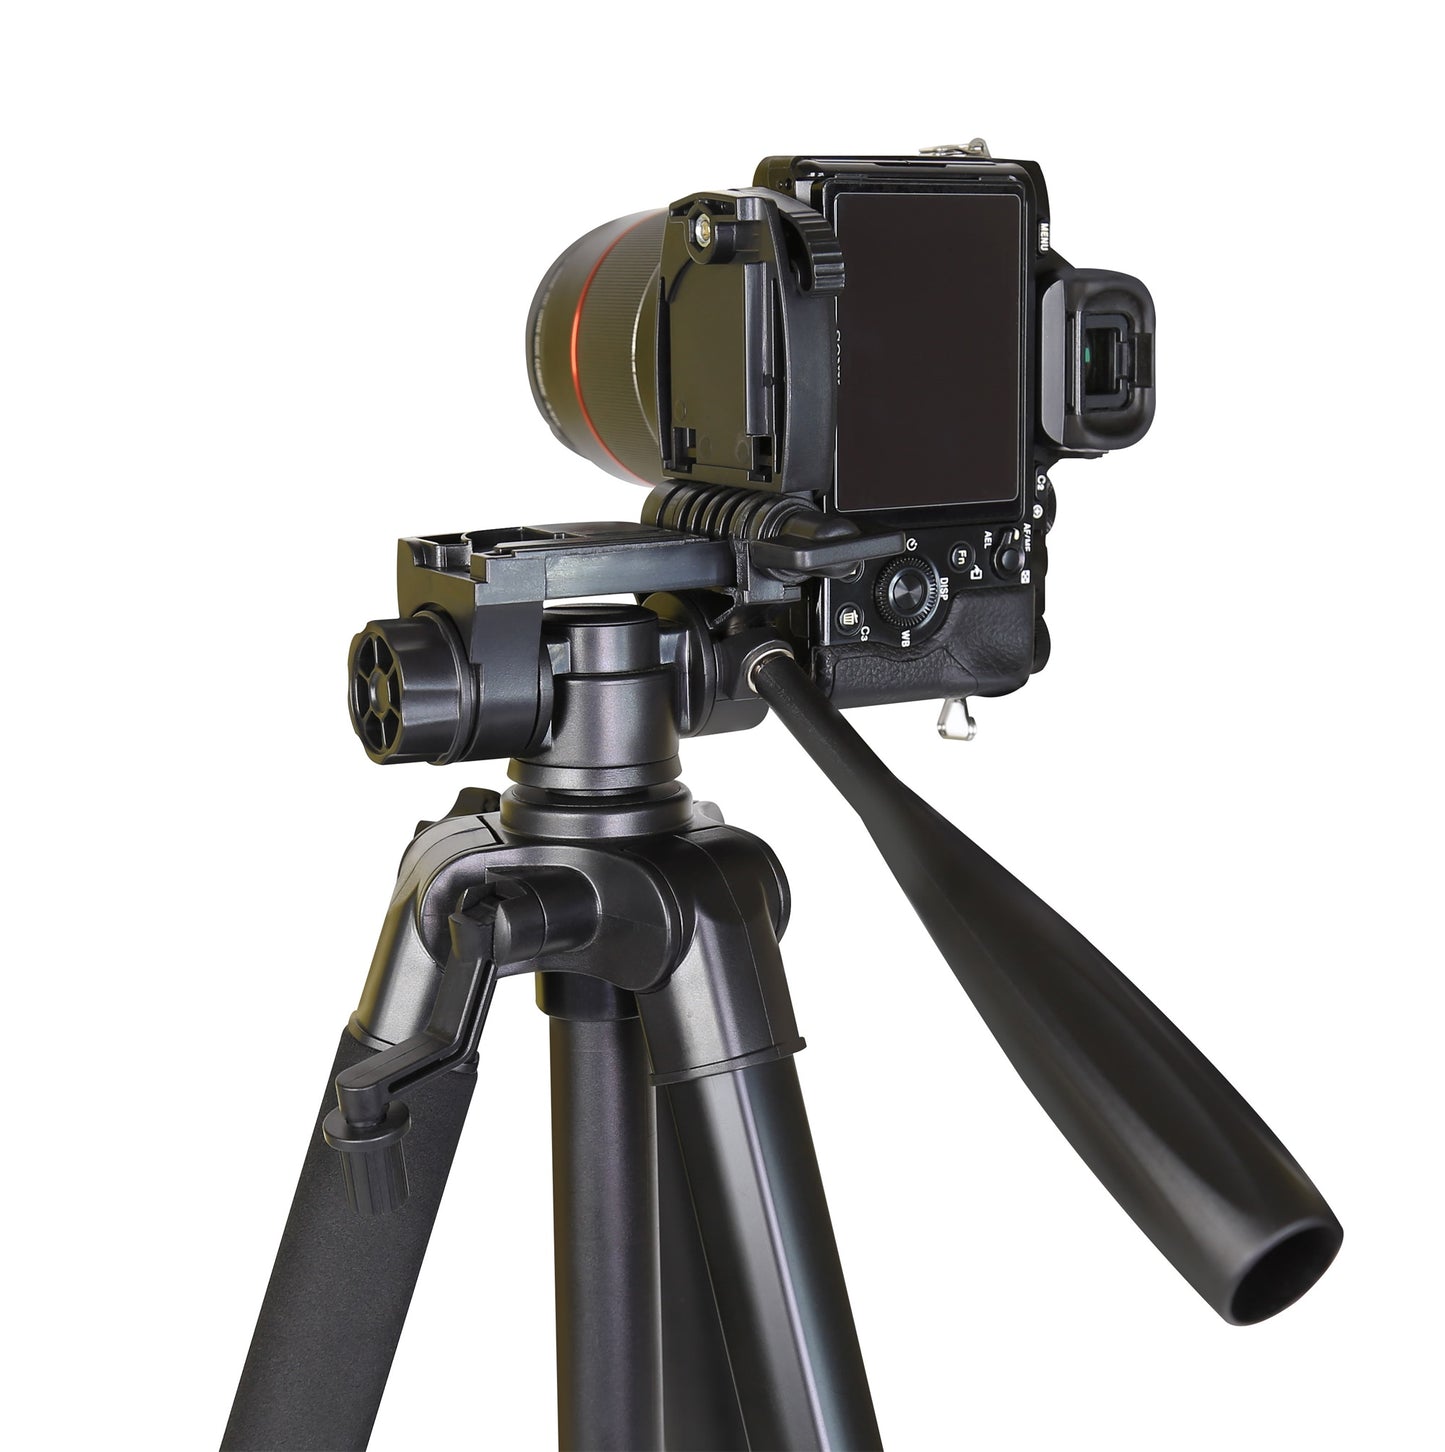 Kingjoy VTS-990L lightweight flip lock video tripod-5 section, 65in, 3lbs, for live streaming, tiktok video